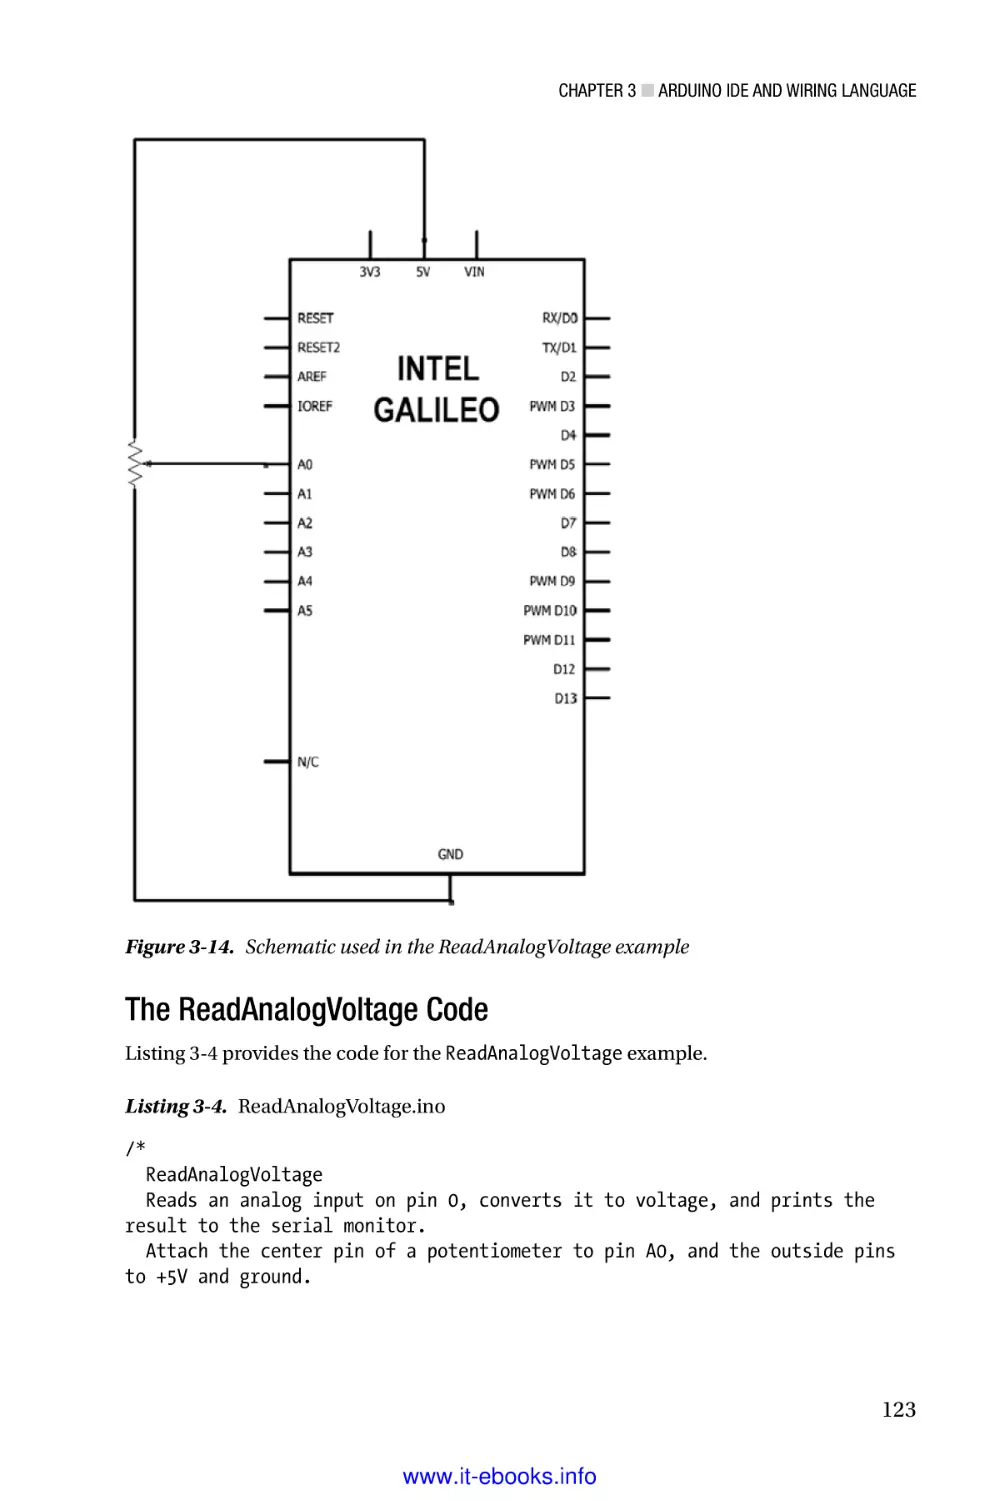 The ReadAnalogVoltage Code